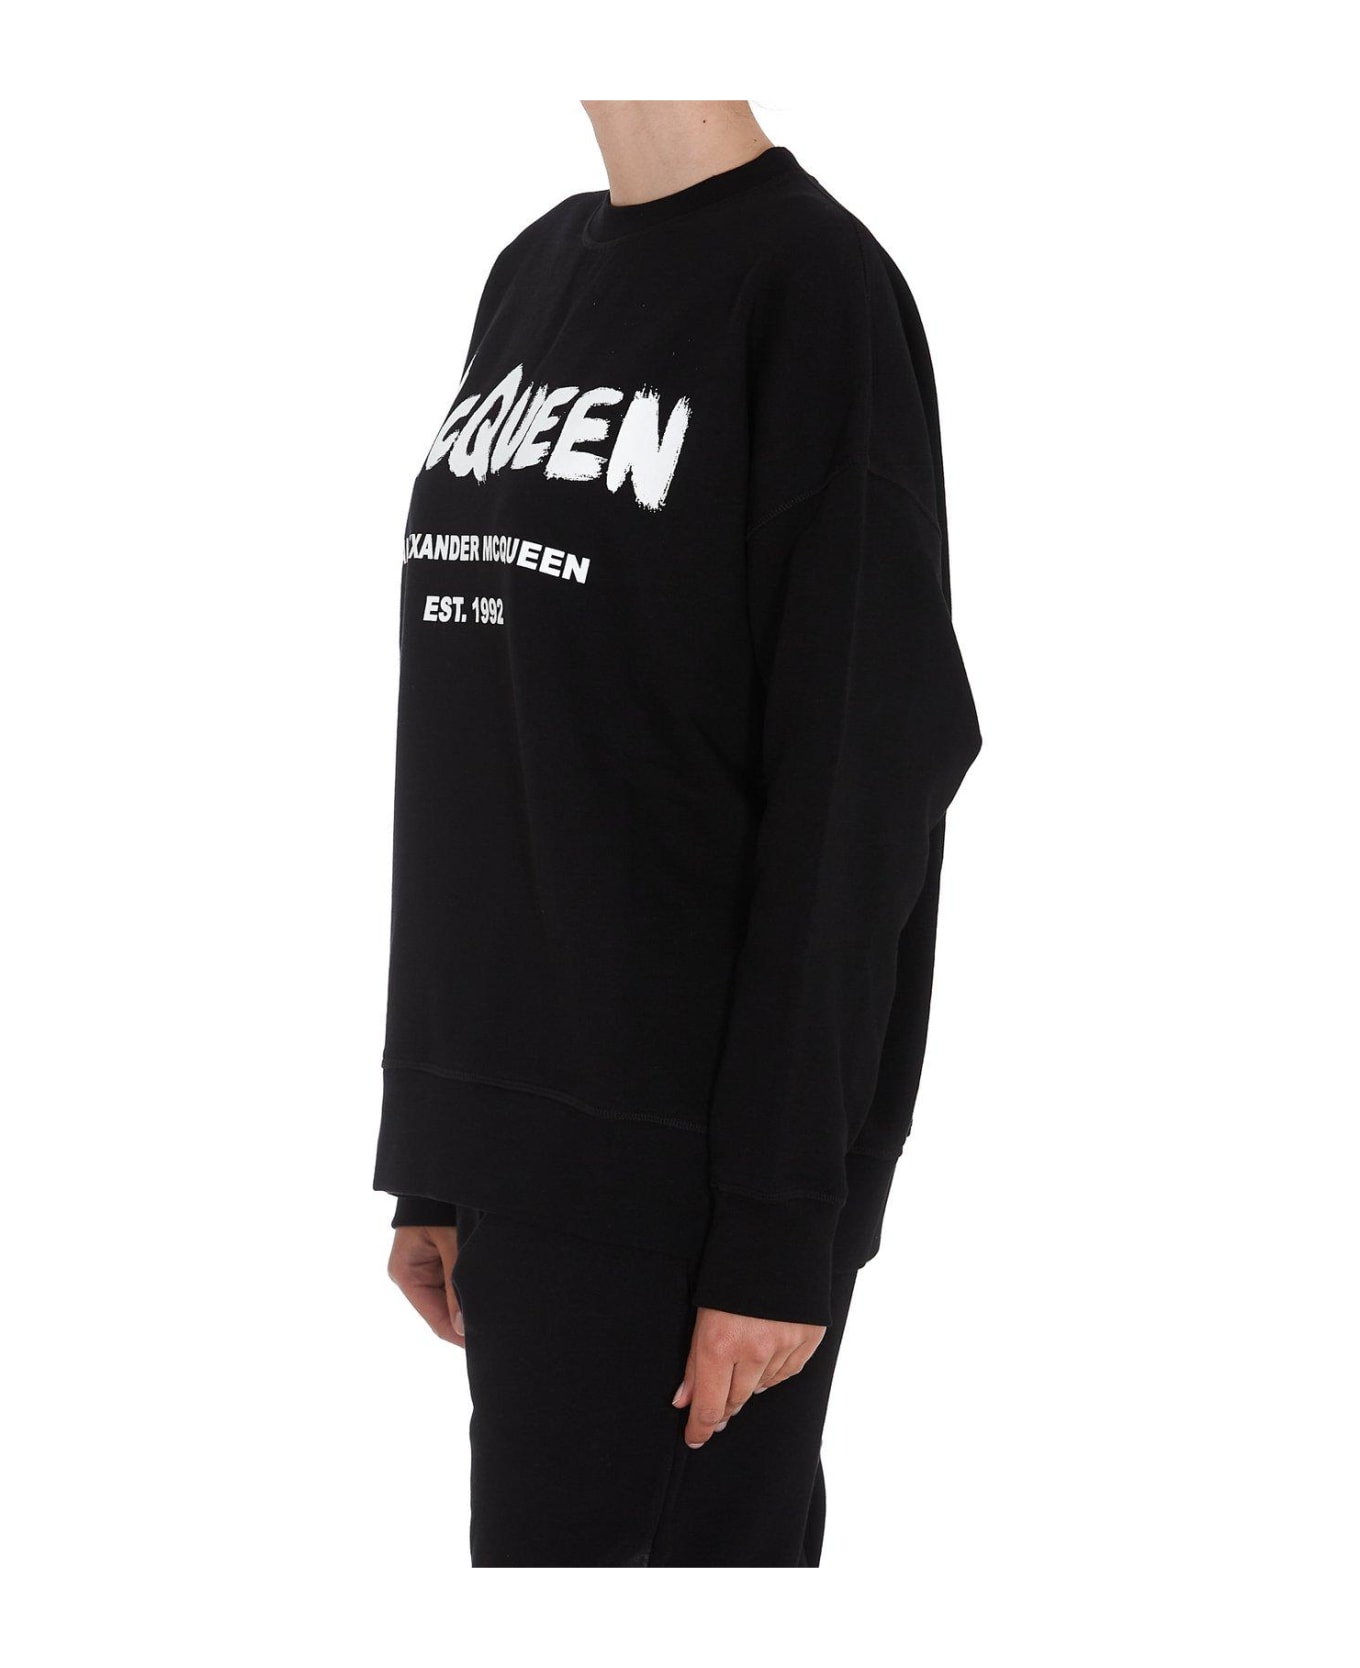 Alexander McQueen Graffiti Printed Sweatshirt - black フリース